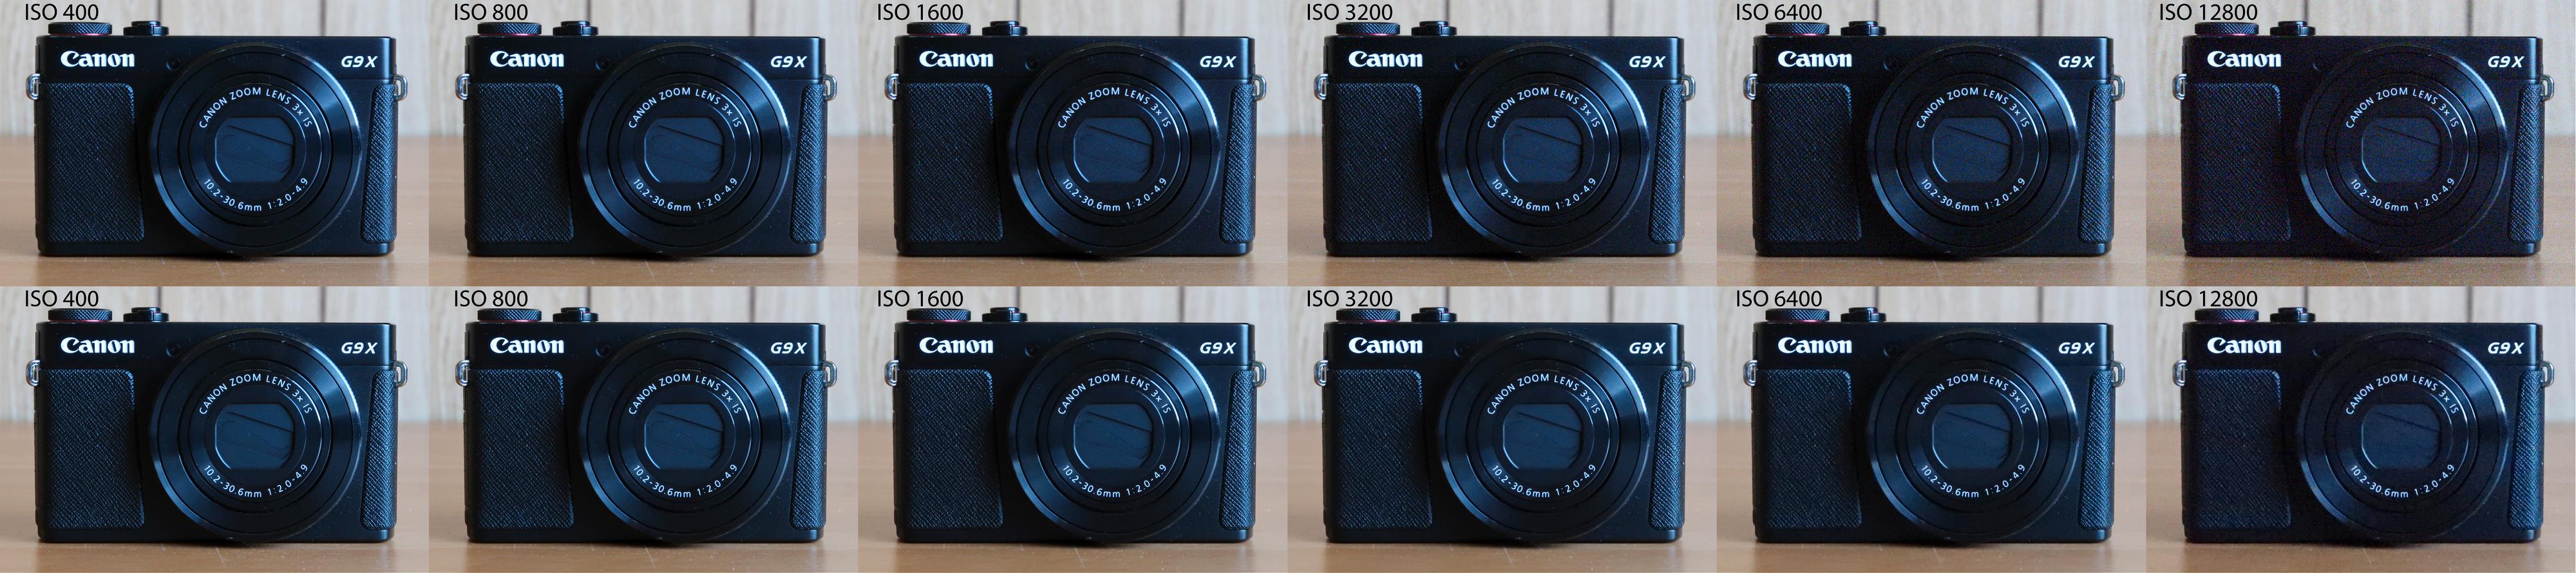 Lillebror G9X har stått fotomodell. Ubehandlet fra RAW øverst, kameraets JPEGer nederst.